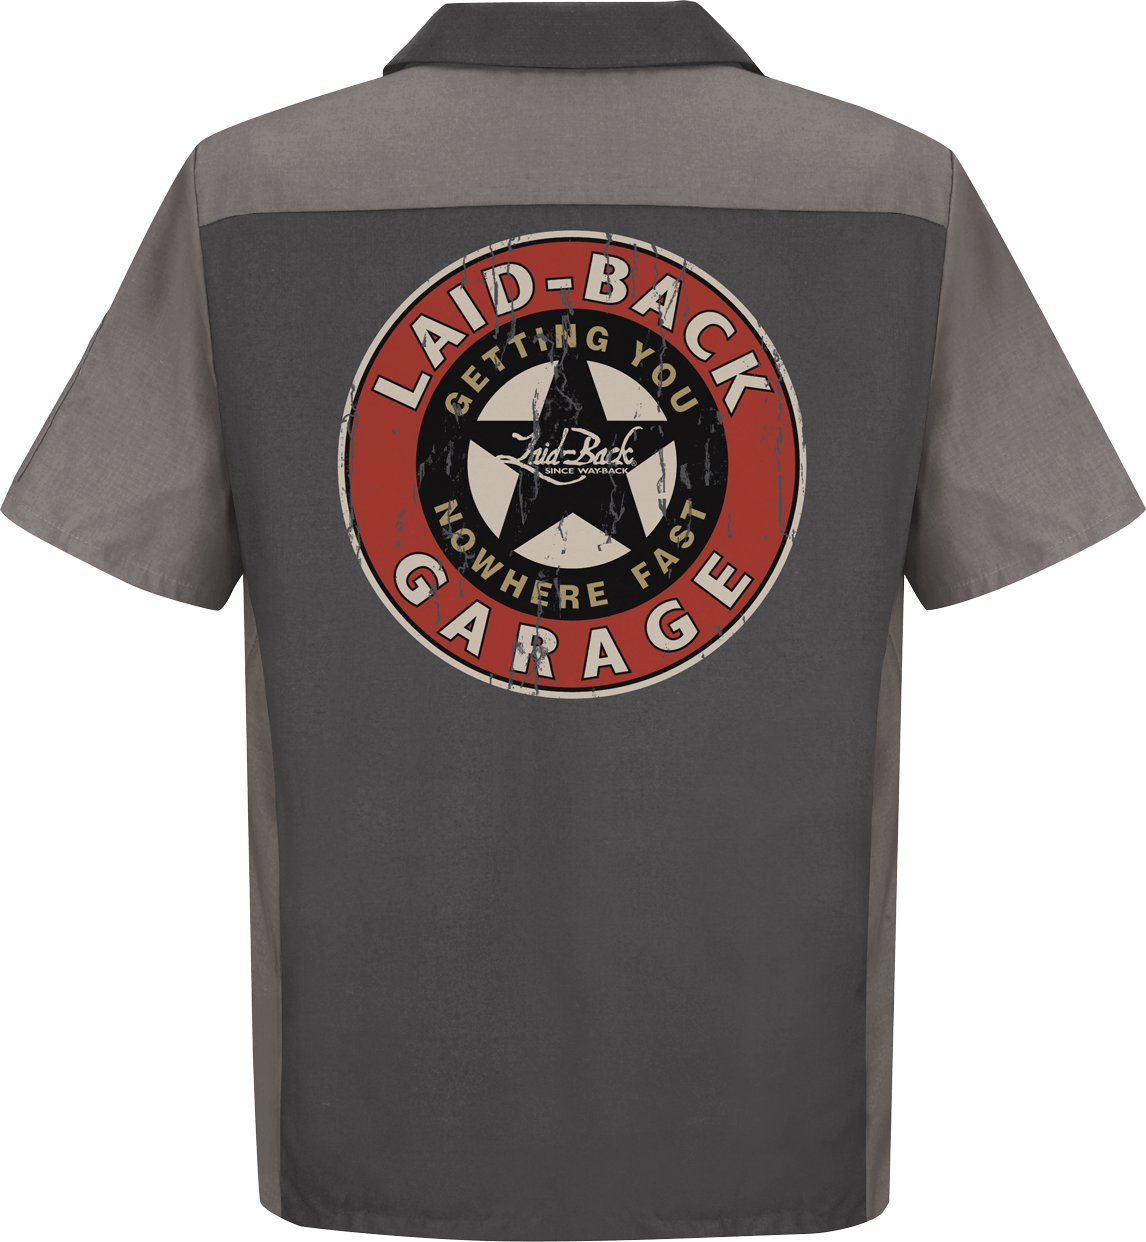 Garage Star 2-Tone Mechanic Shirt